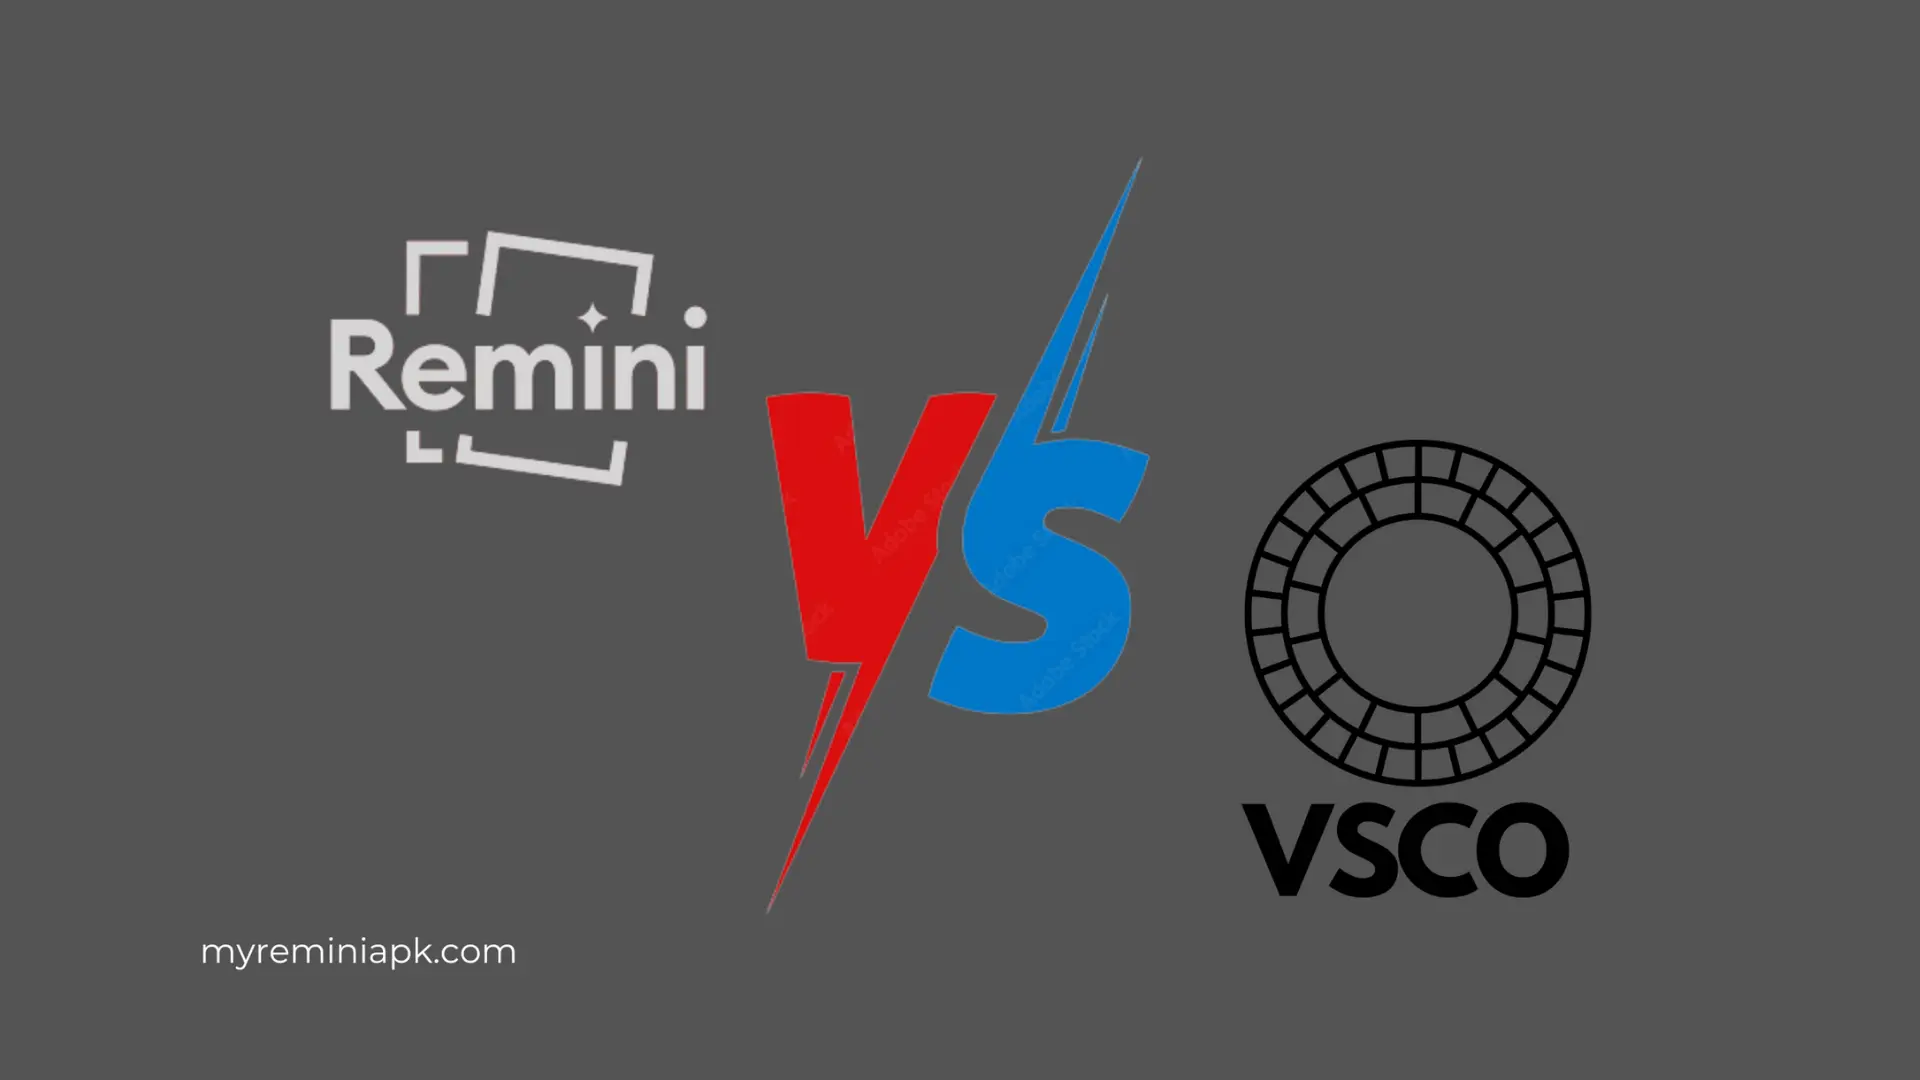 Remini vs VSCO: Which is Better?